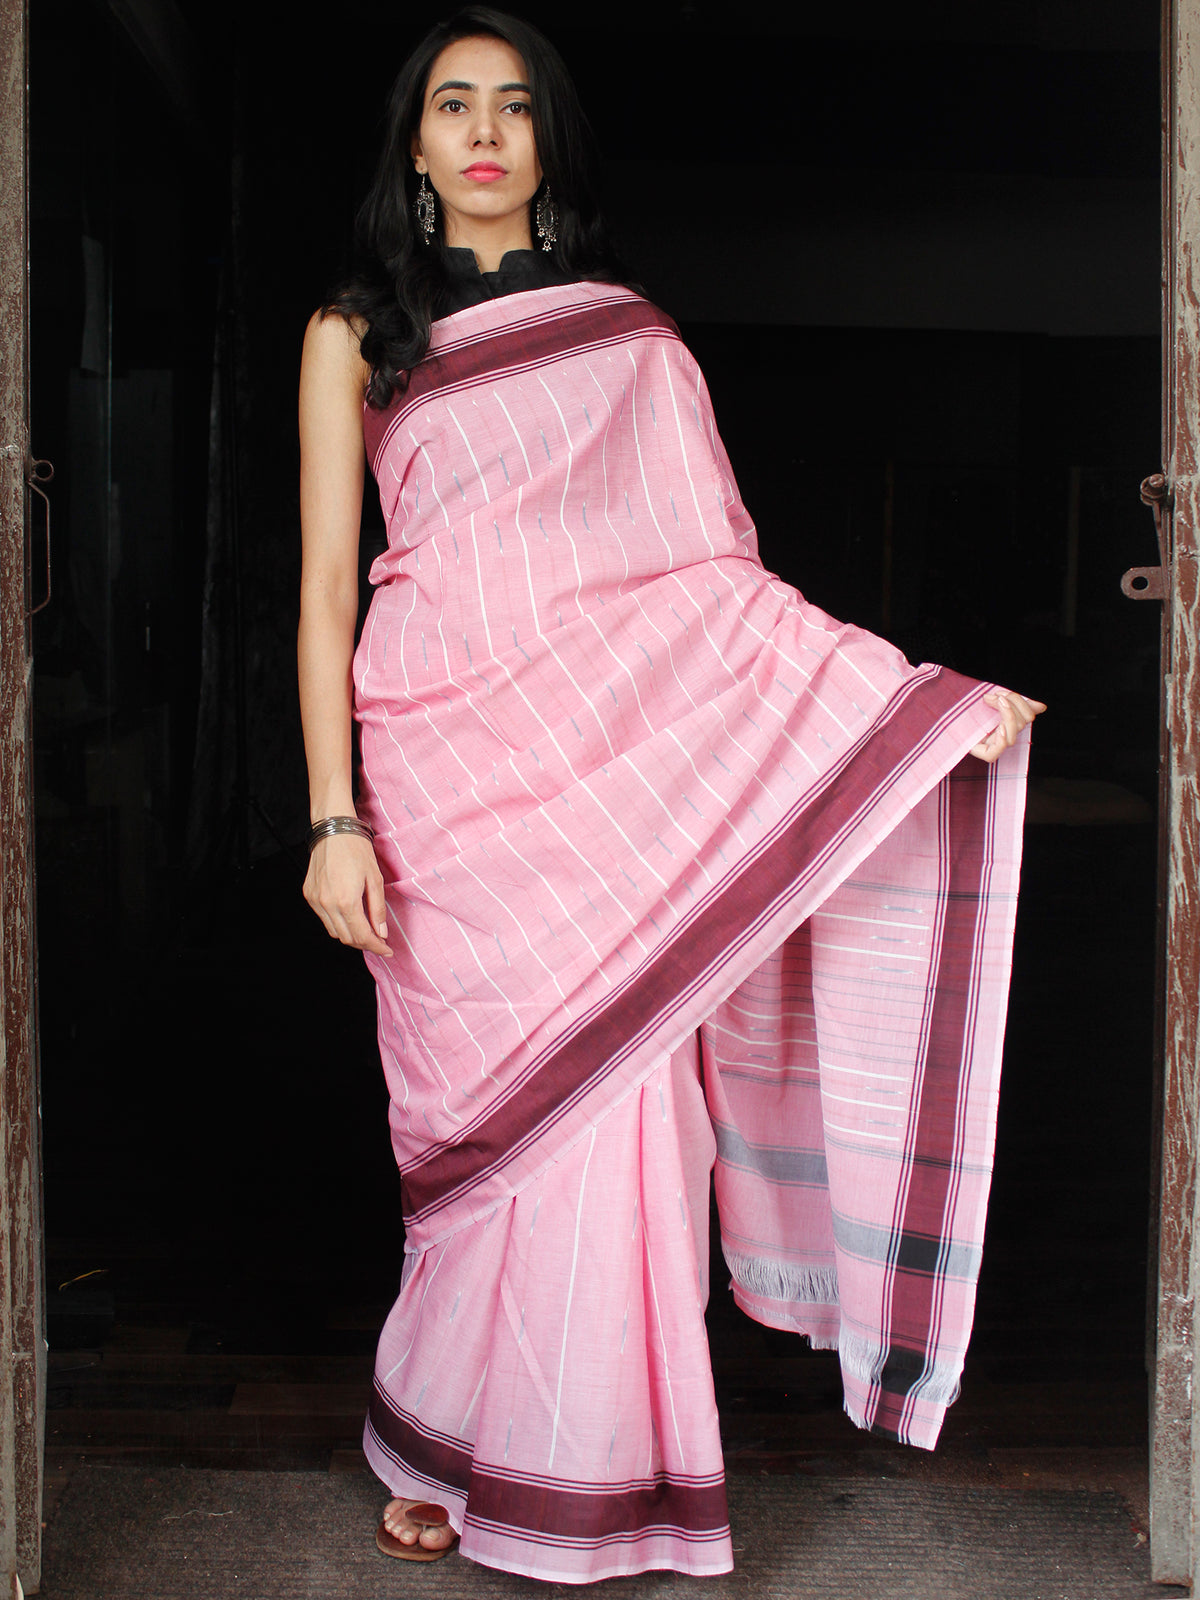 Baby Pink White Maroon Ikat Handwoven Cotton Saree With Ganga Jamuna Border - S031703645